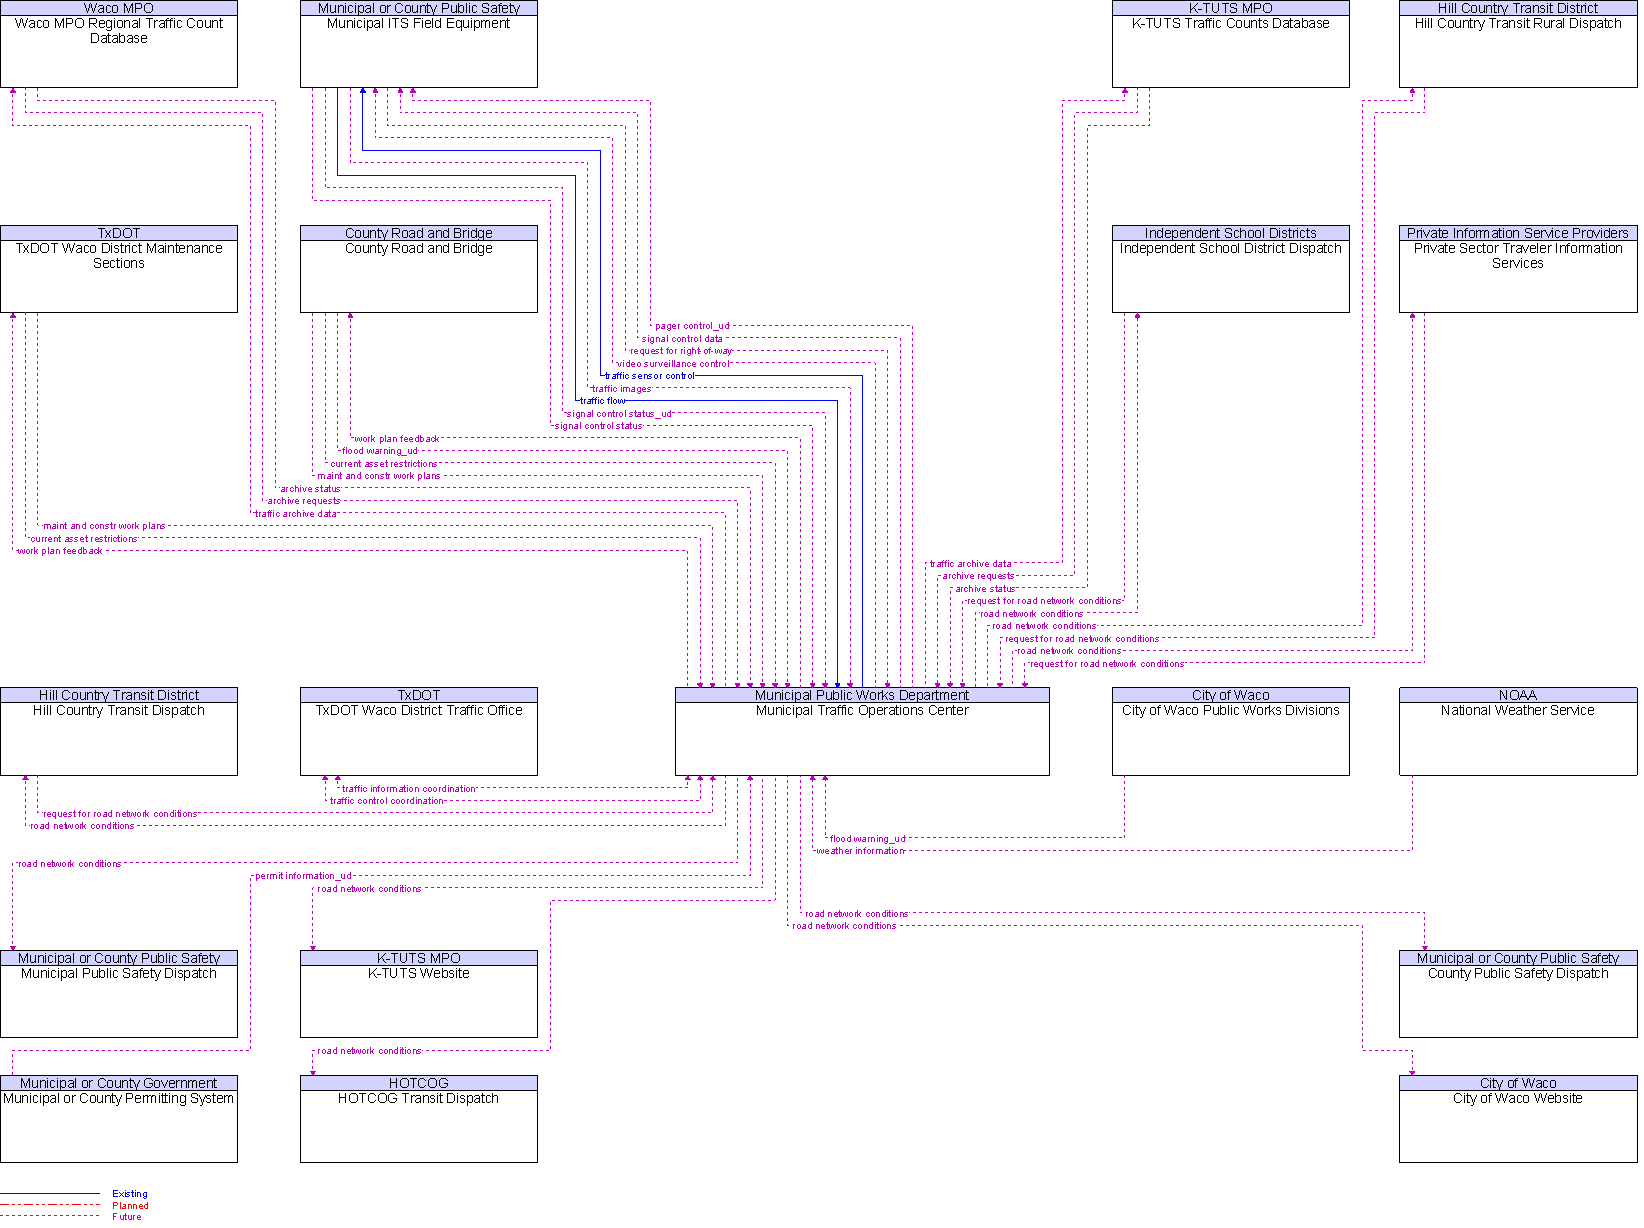 Context Diagram for Municipal Traffic Operations Center